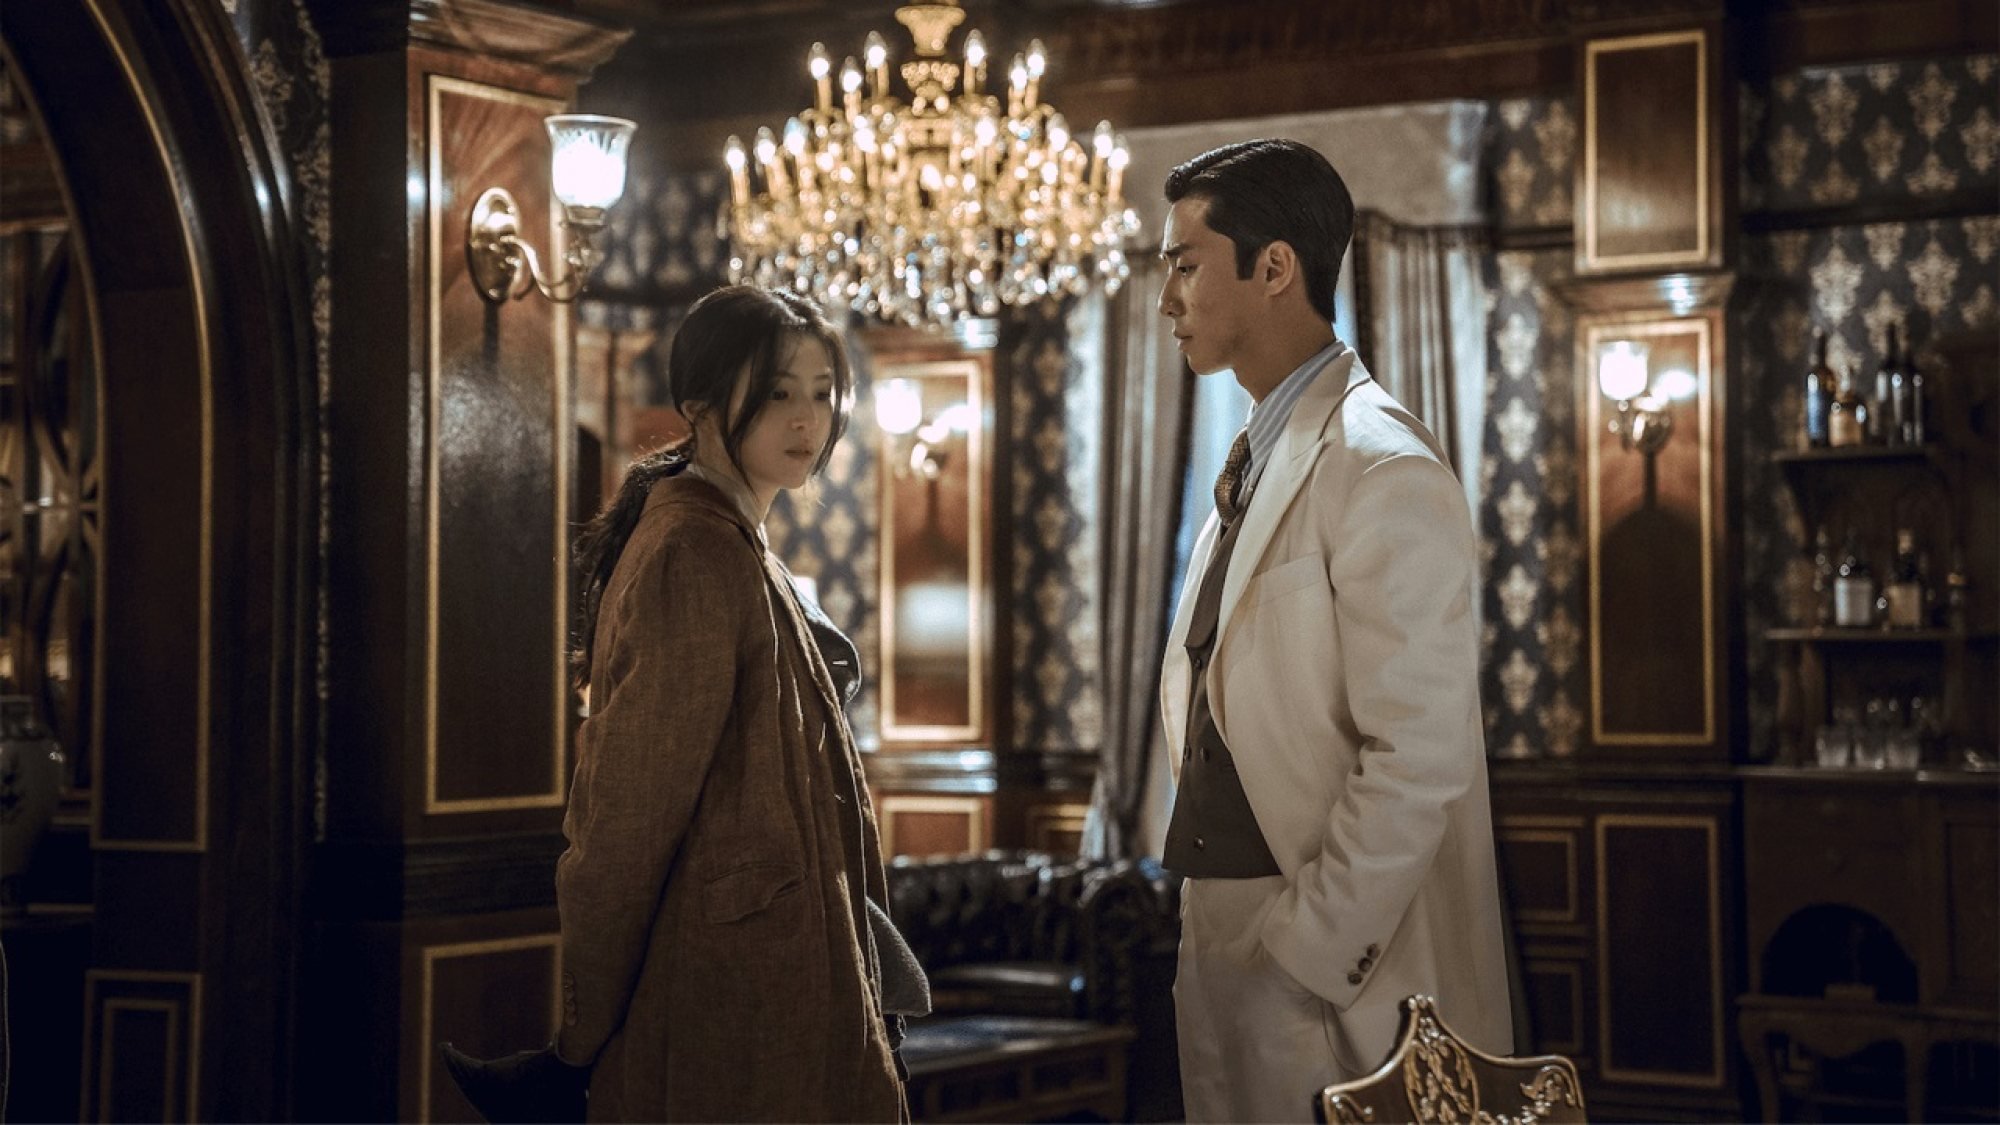 King The Land': Jun-ho and Yoon-ah's K-drama enrages Arab viewers over  Prince's portrayal - Entertainment